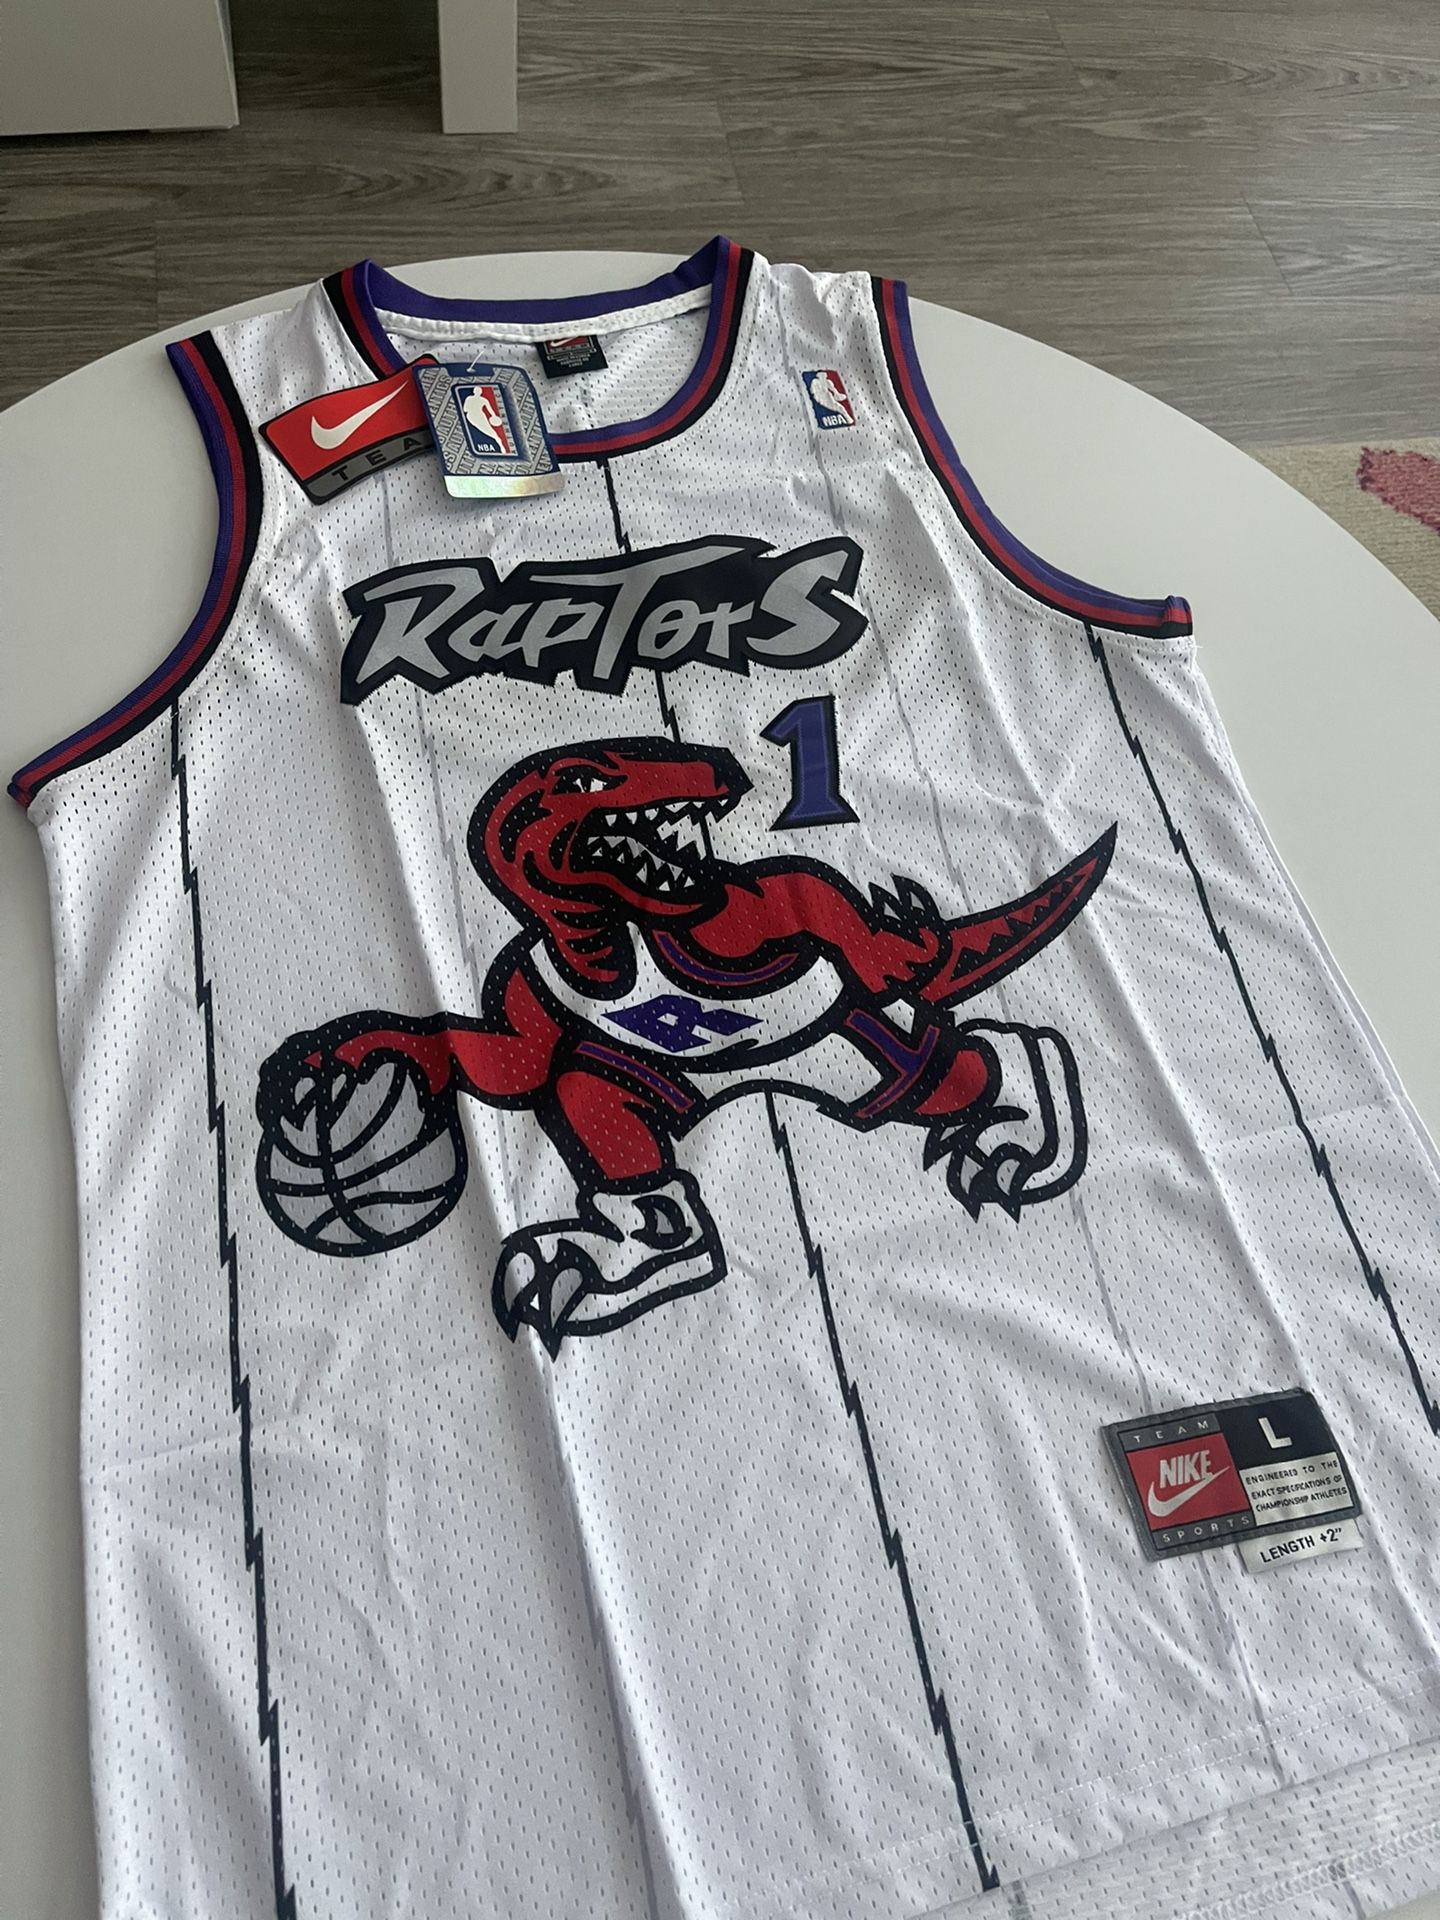 Throwback Raptors TMac Jersey For Sale! Size L for Sale in Suwanee, GA -  OfferUp